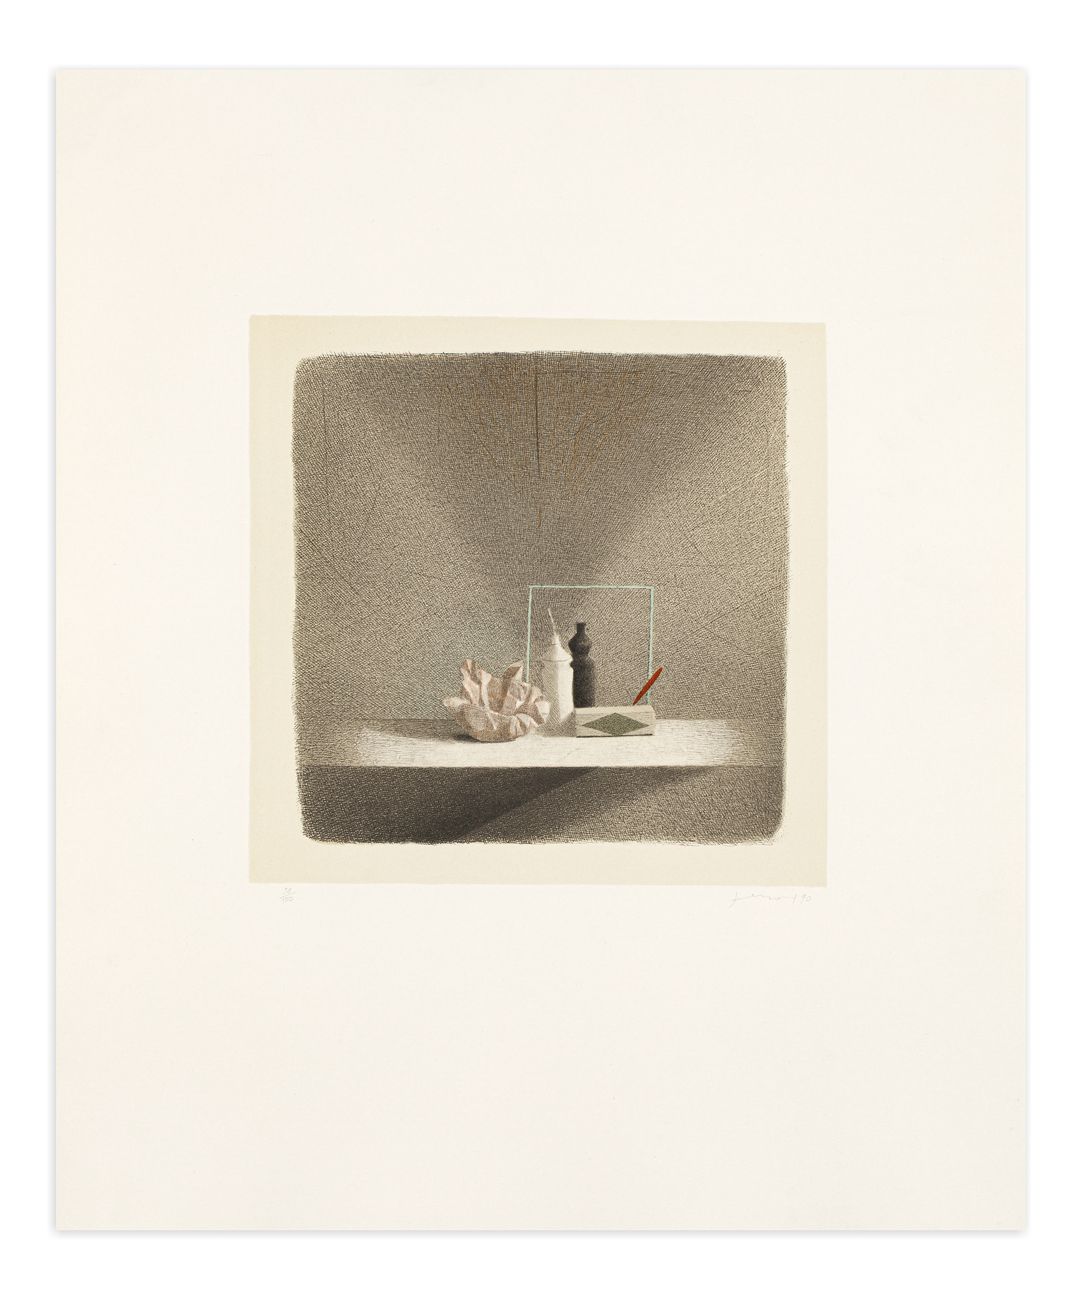 GIANFRANCO FERRONI (1927-2001) - Cono d'ombra, 1990 Lithographie auf Hintergrund&hellip;